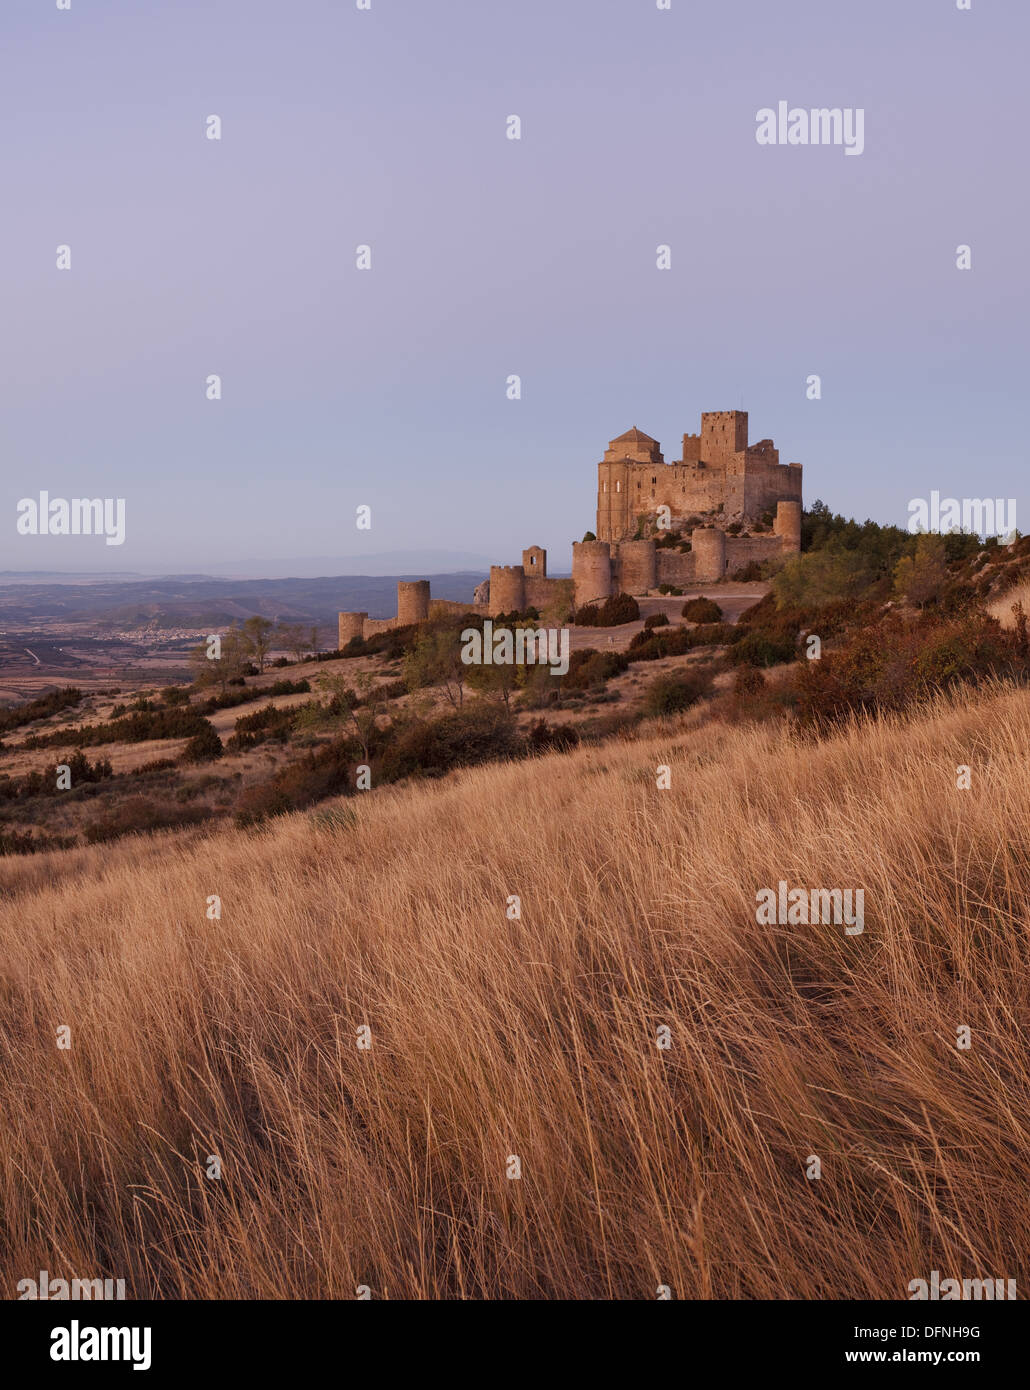 Castillo de Loarre, castle, between 12th till 13th century, provinz of Huesca, Aragon, Northern Spain, Spain, Europe Stock Photo